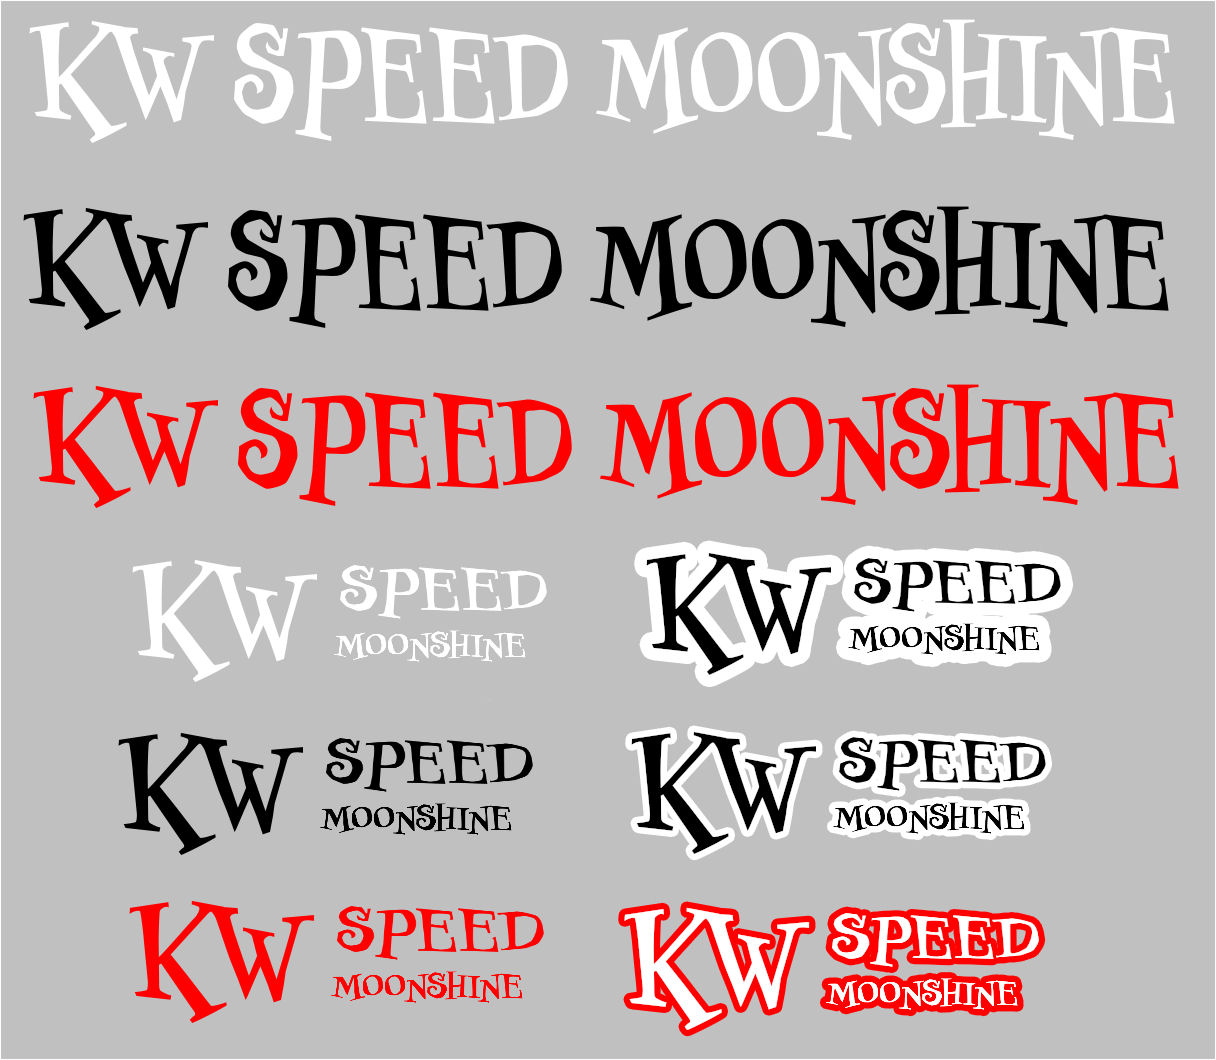 KW-Speed Moonshine.jpg